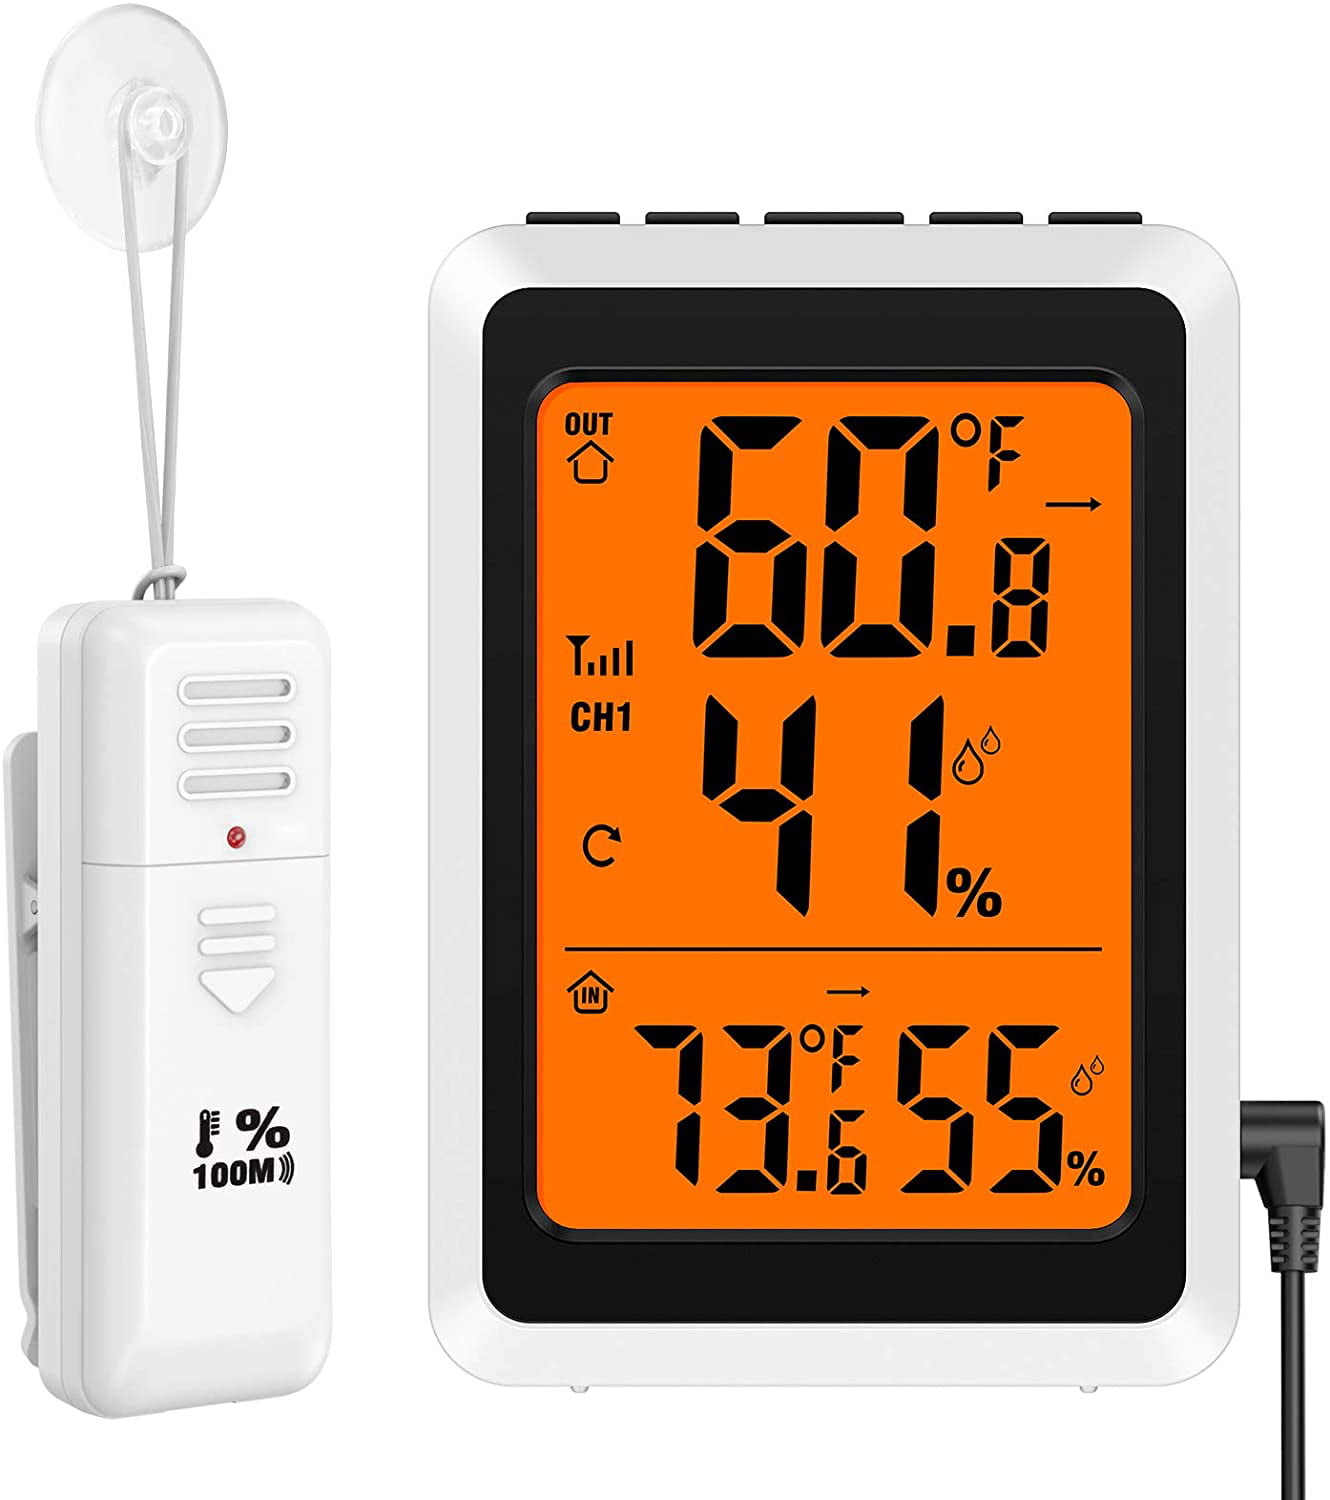 Brifit Wireless Thermometer Hygrometer Mini Bluetooth Indoor Temperature Sensor